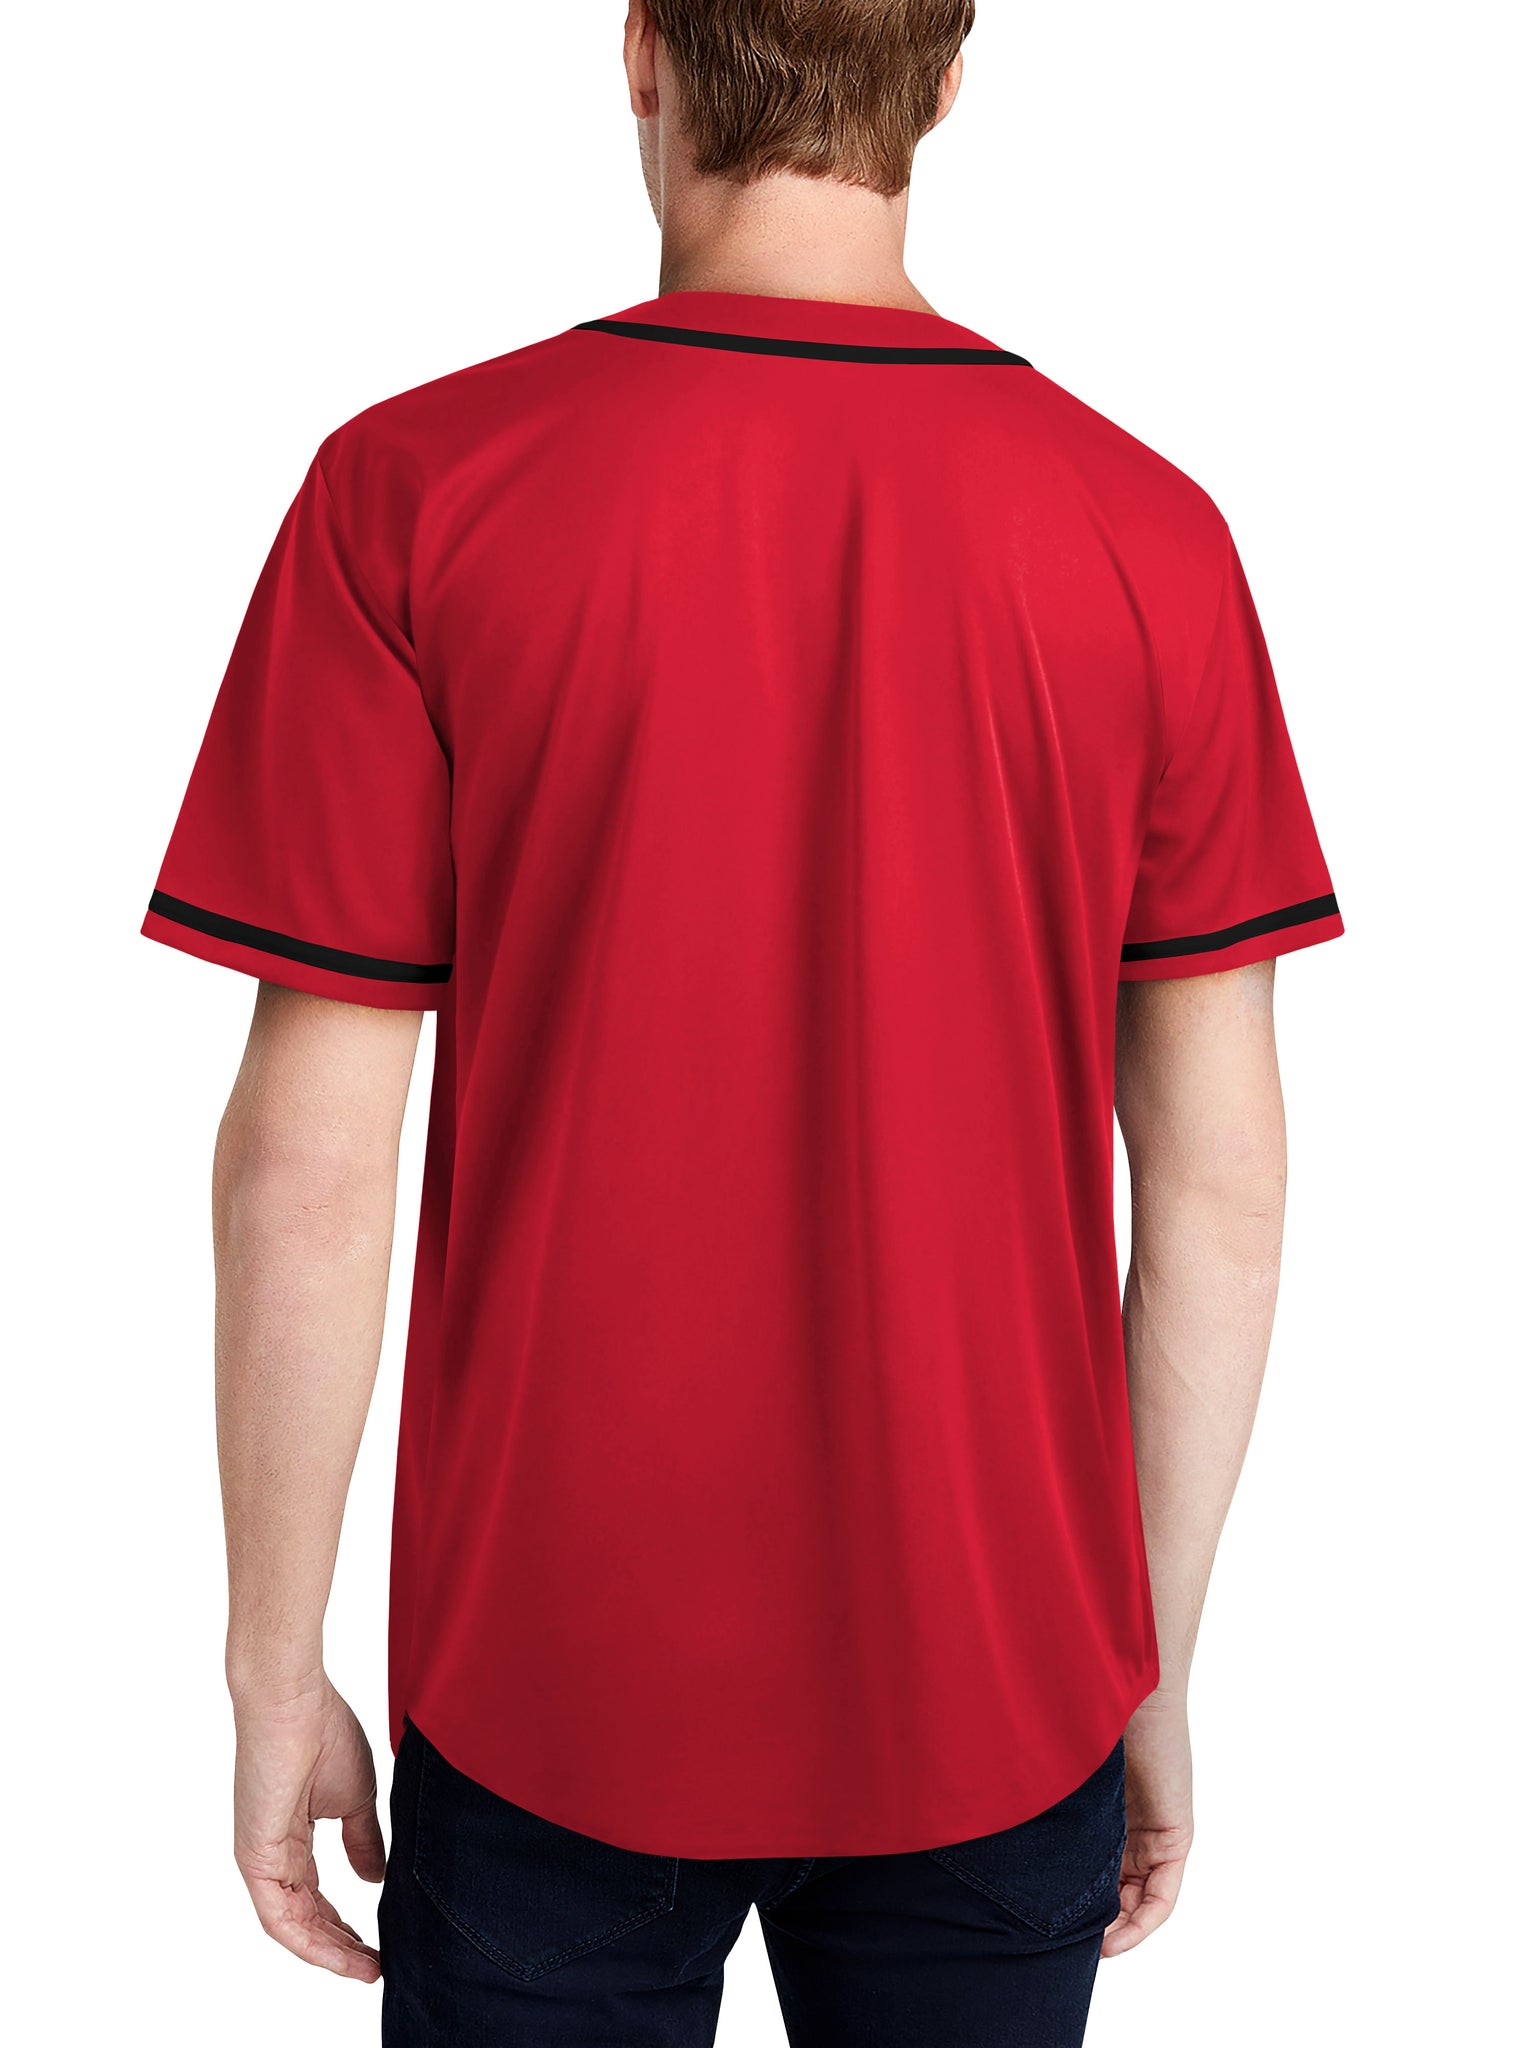 red blank baseball jerseys